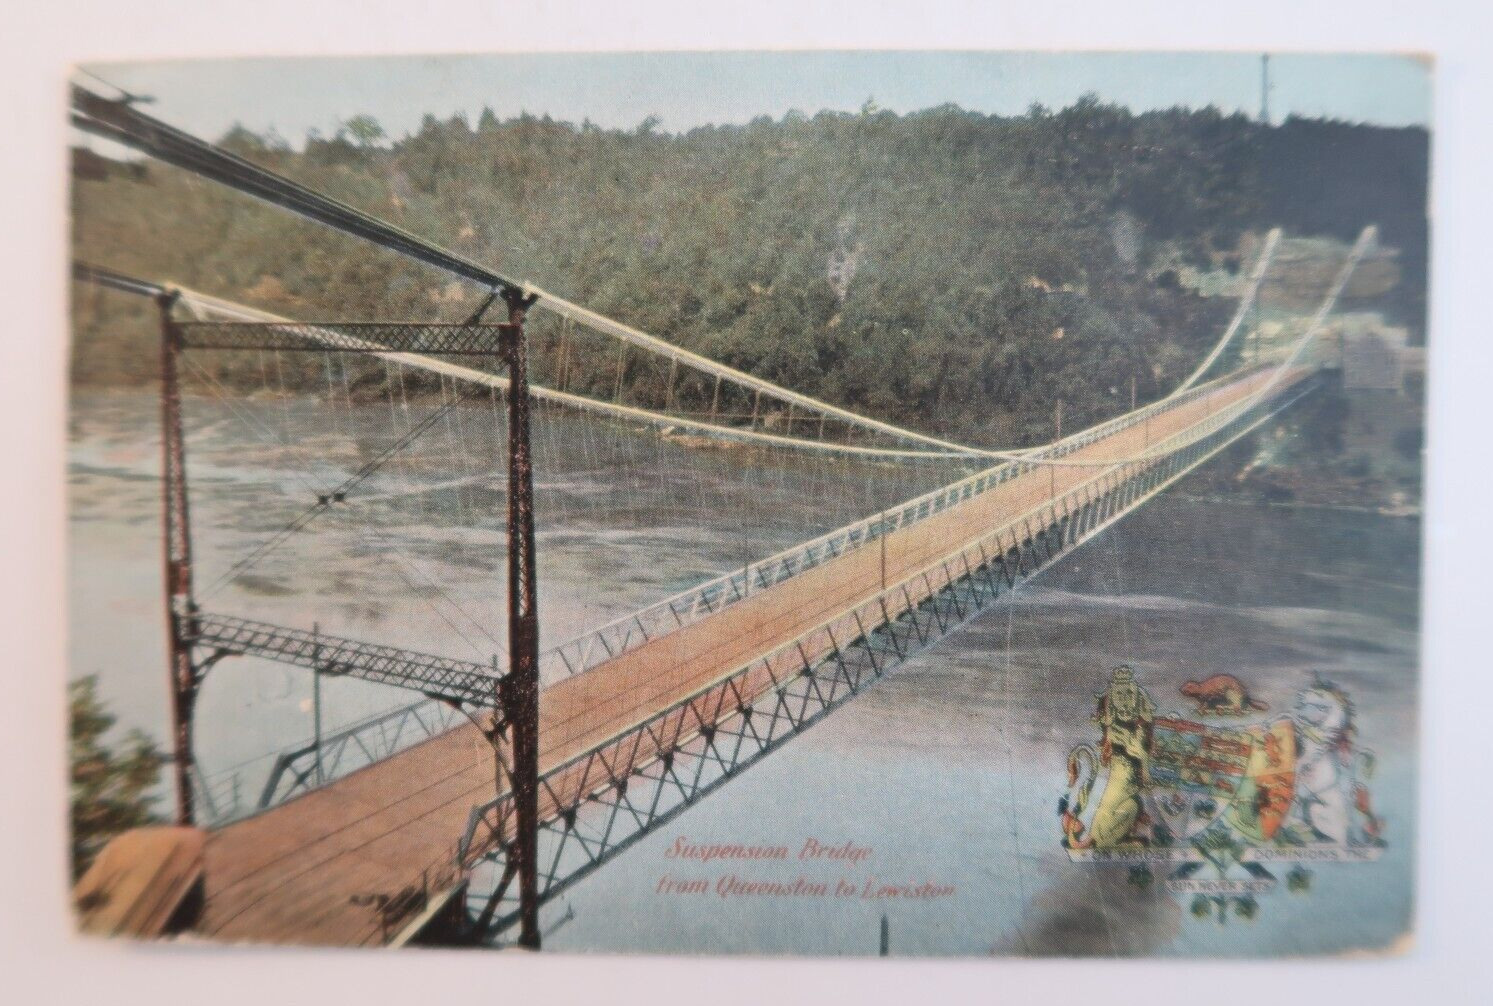 c. 1908 Suspension Bridge from Queenston to Lewiston Nicklis Vintage Postcard